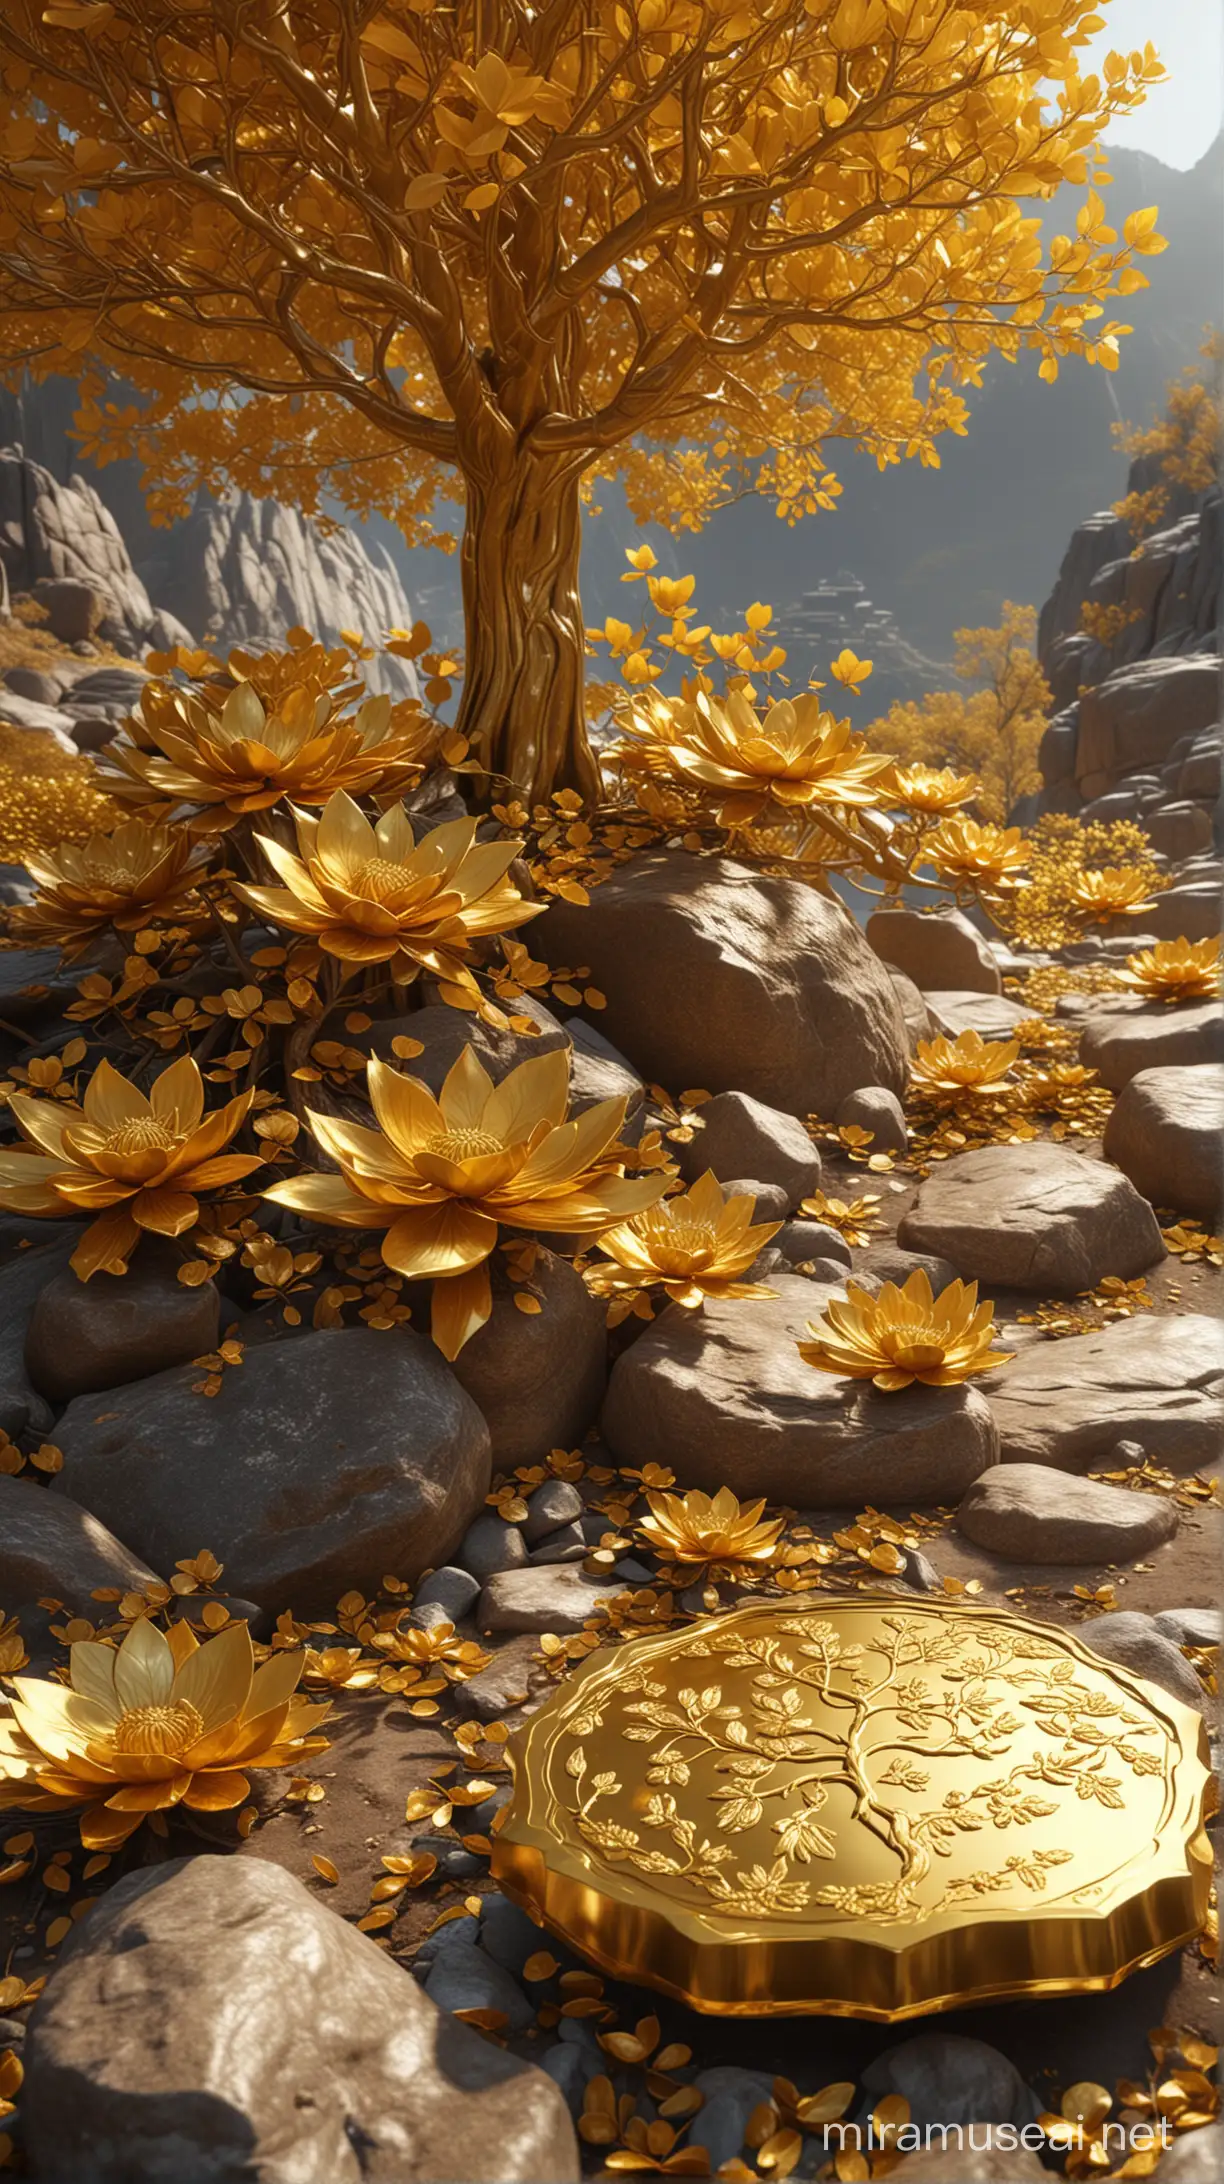 Golden Ingots Tree on Jinshan Mountain with Lotus Flowers 8K Ultra HD Fantasy Art